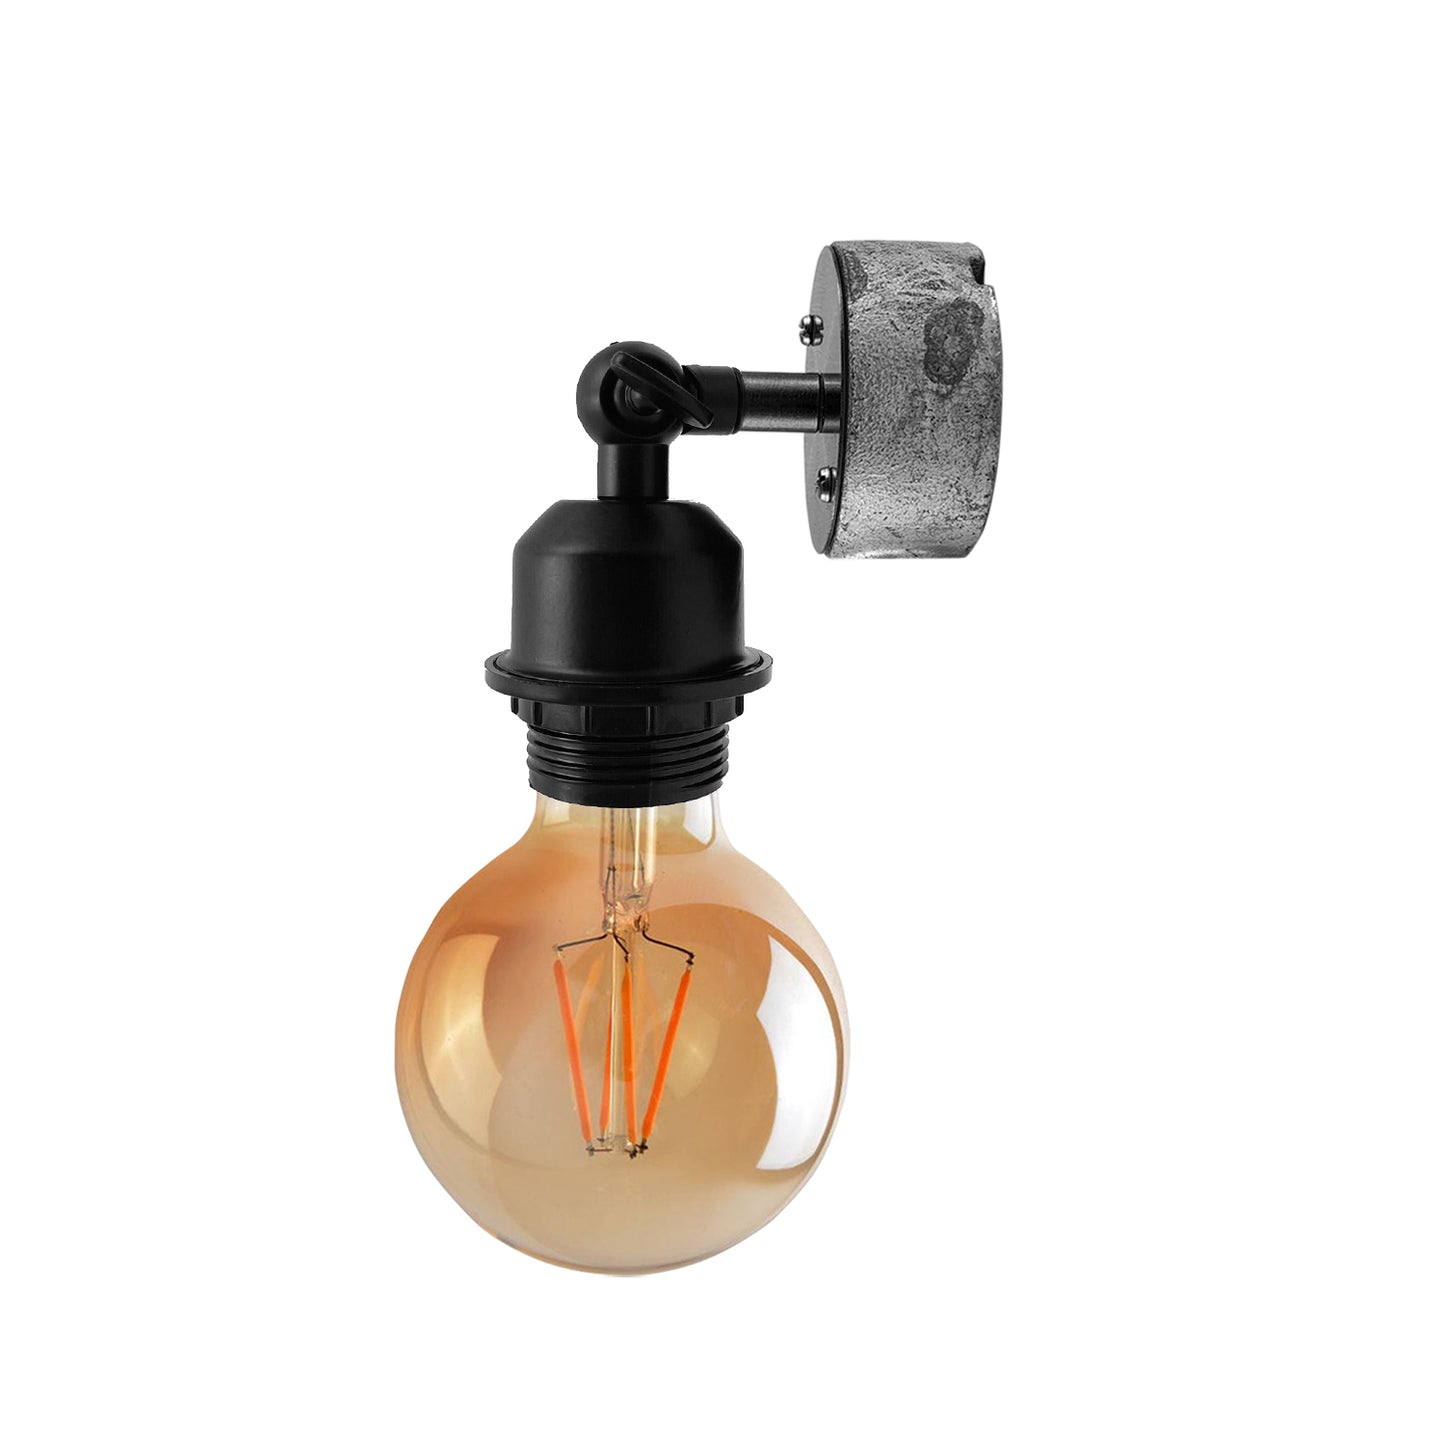 industrial Adjustable Ceiling Lamp Wall Mounted Light Bulb Holder Black~2548